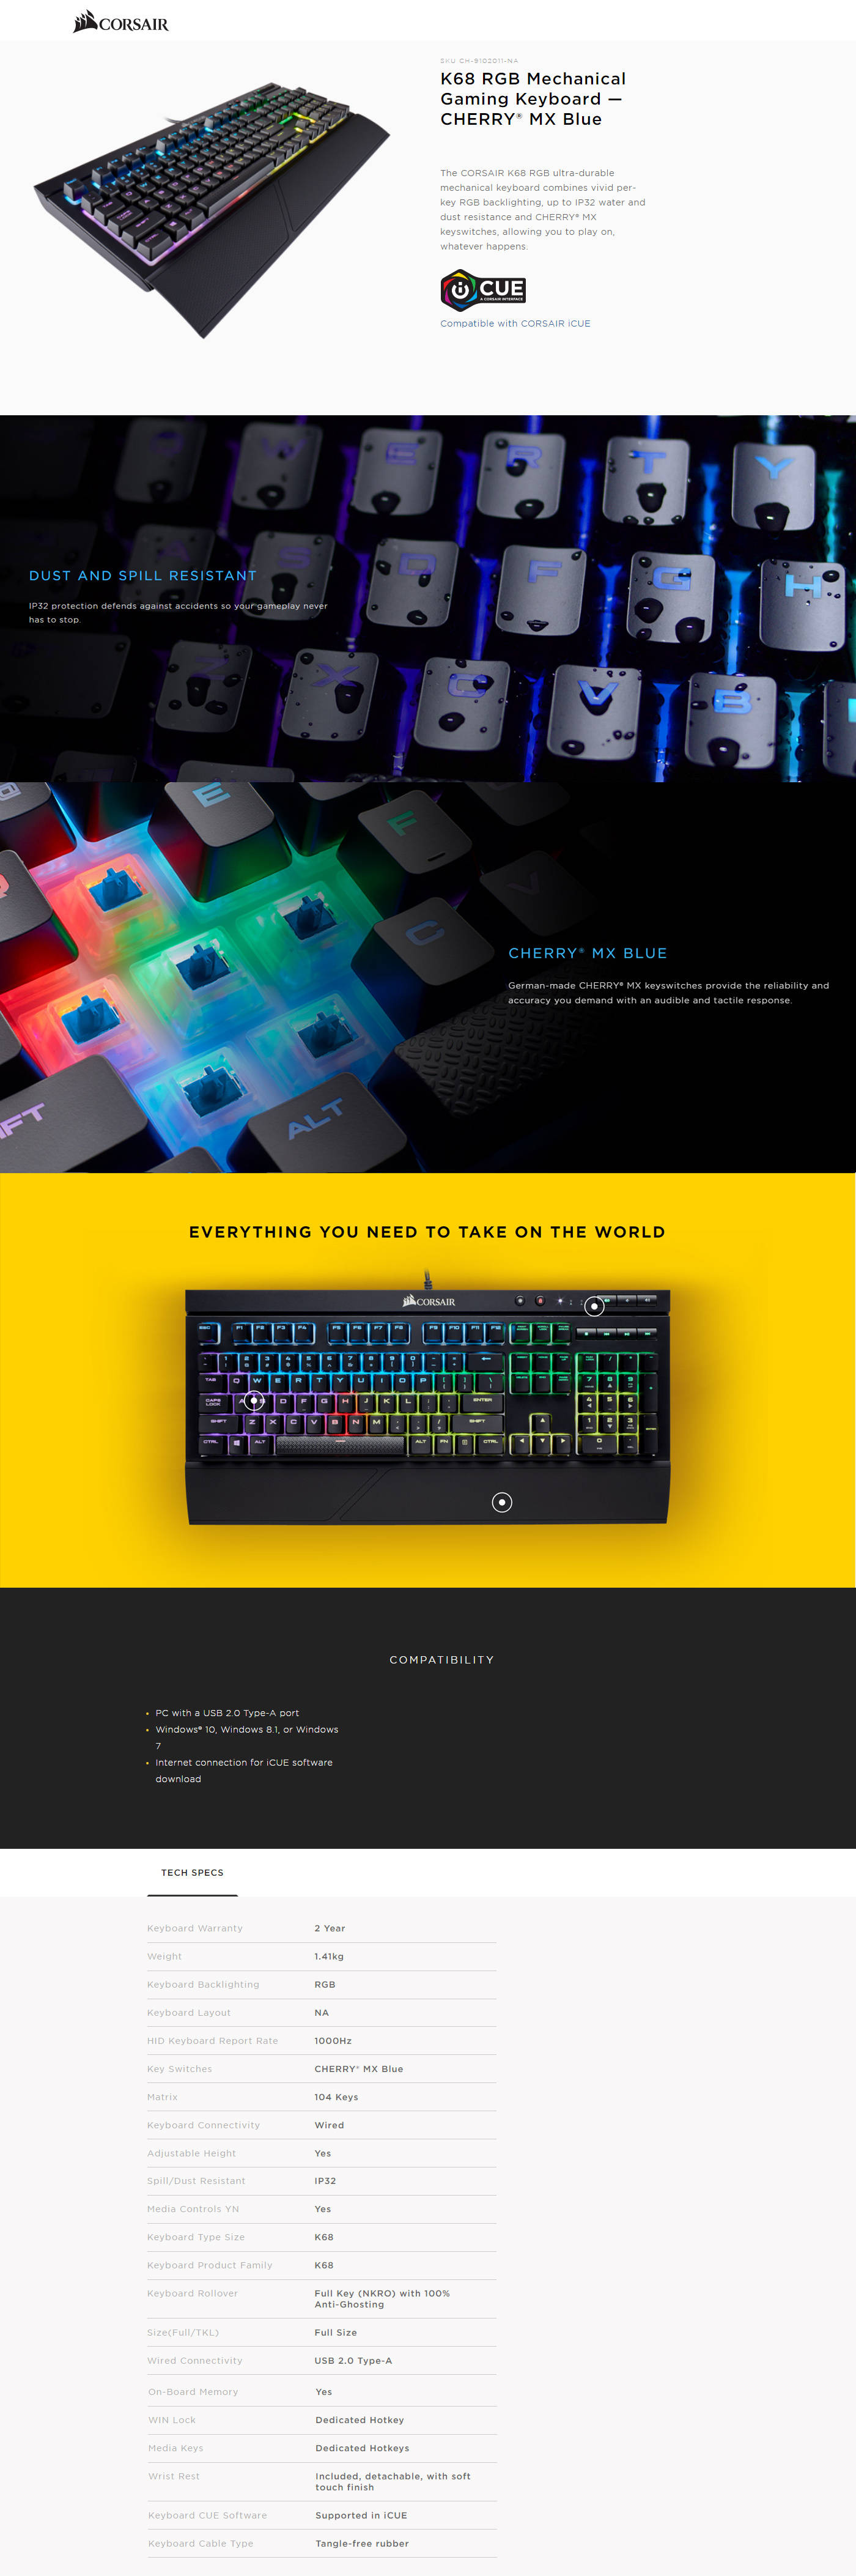 Buy Online Corsair K68 RGB Mechanical Gaming Keyboard - Cherry MX Blue (CH-9102011-NA)